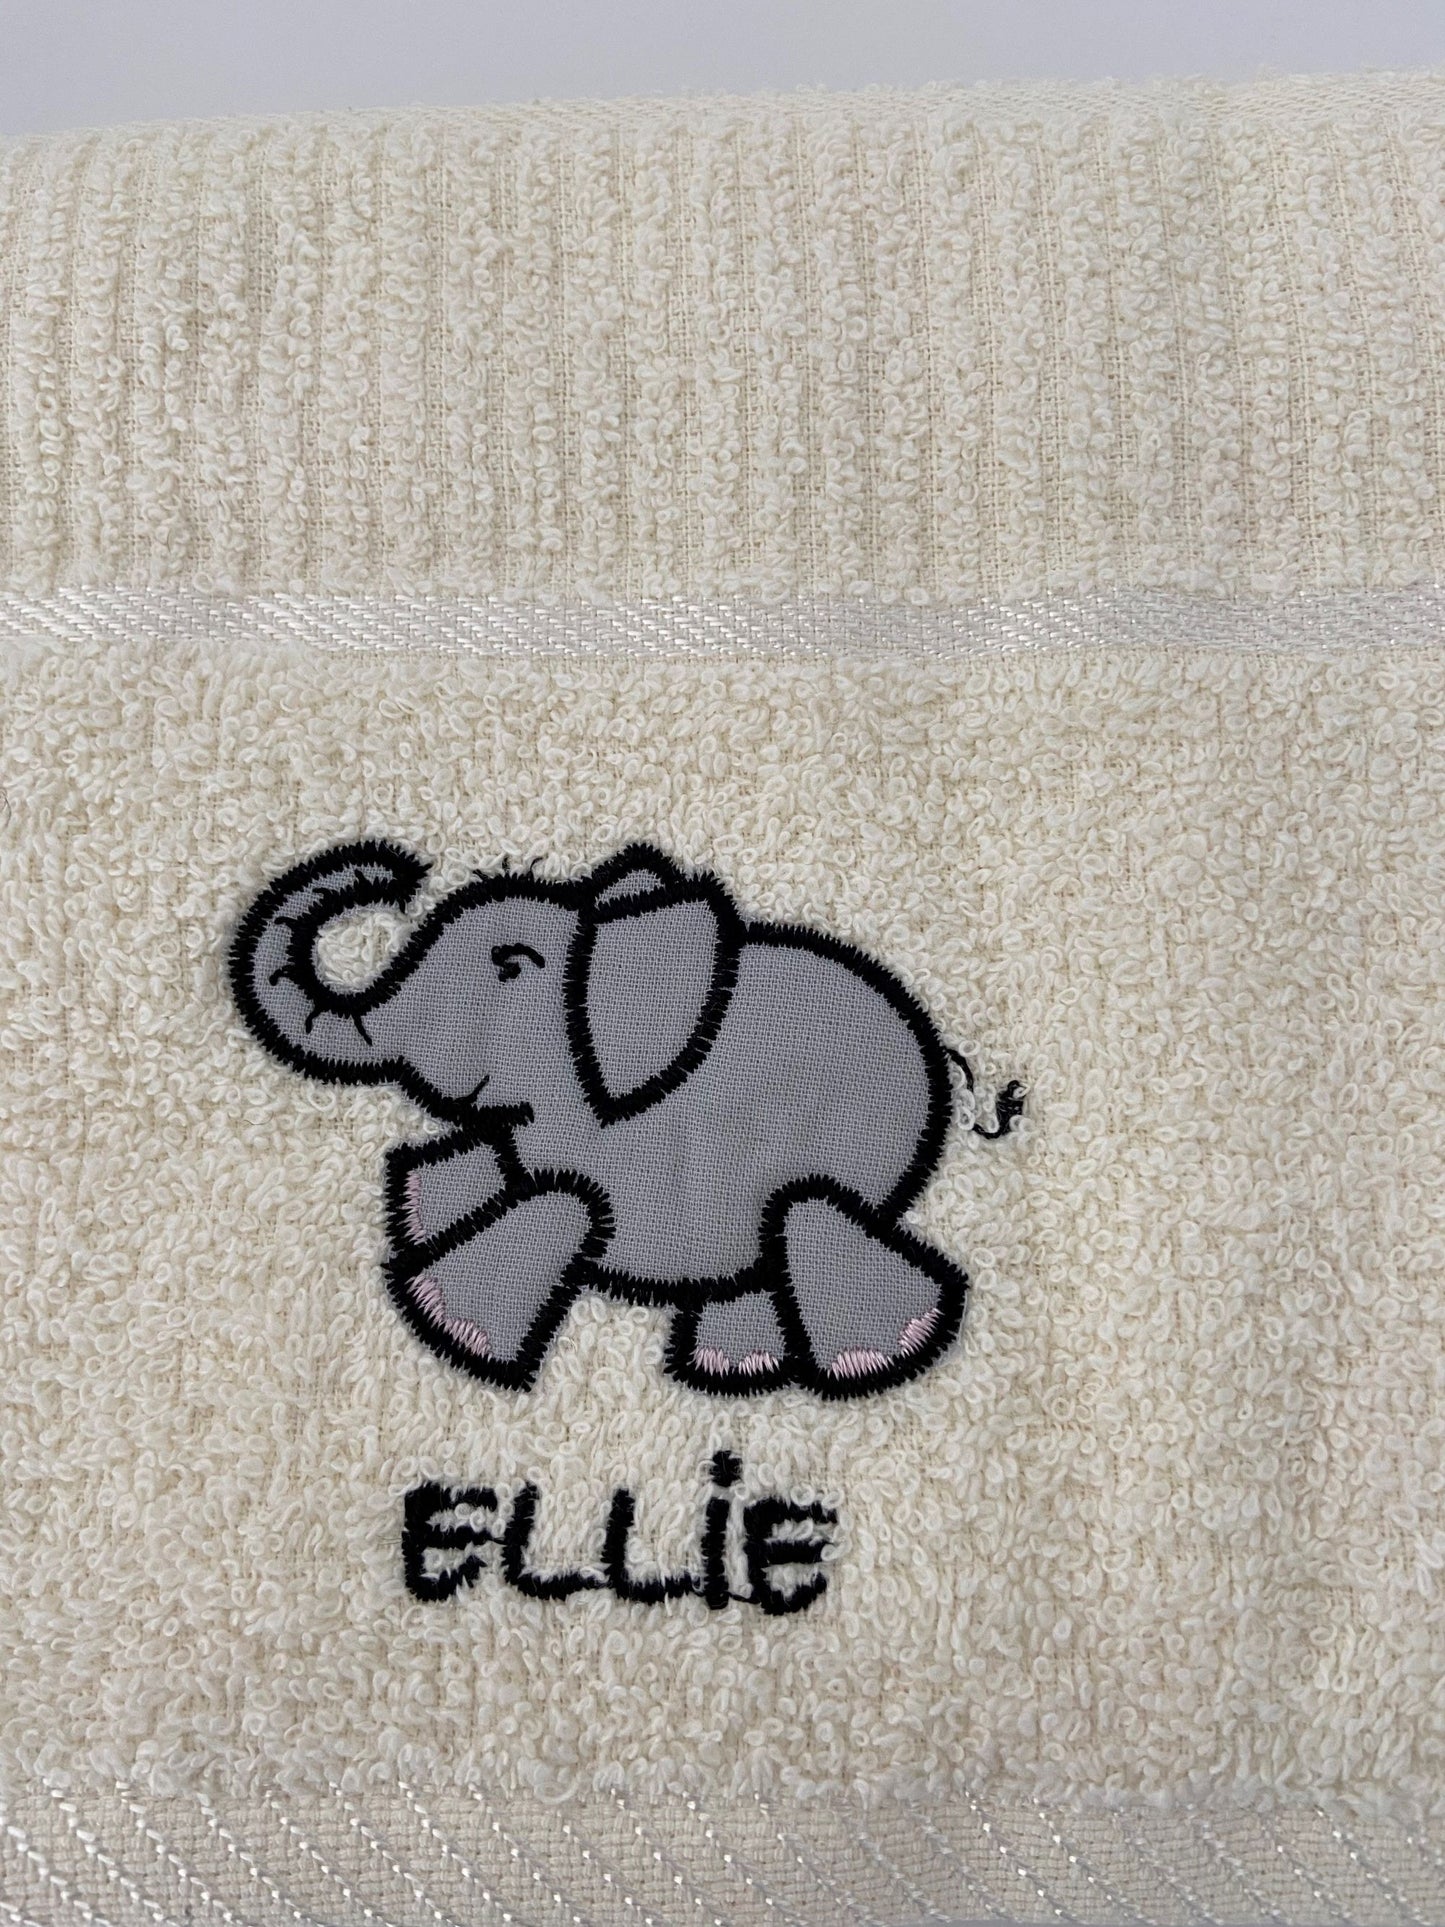 Ellie Elephant Tea Kitchen Towel Cream